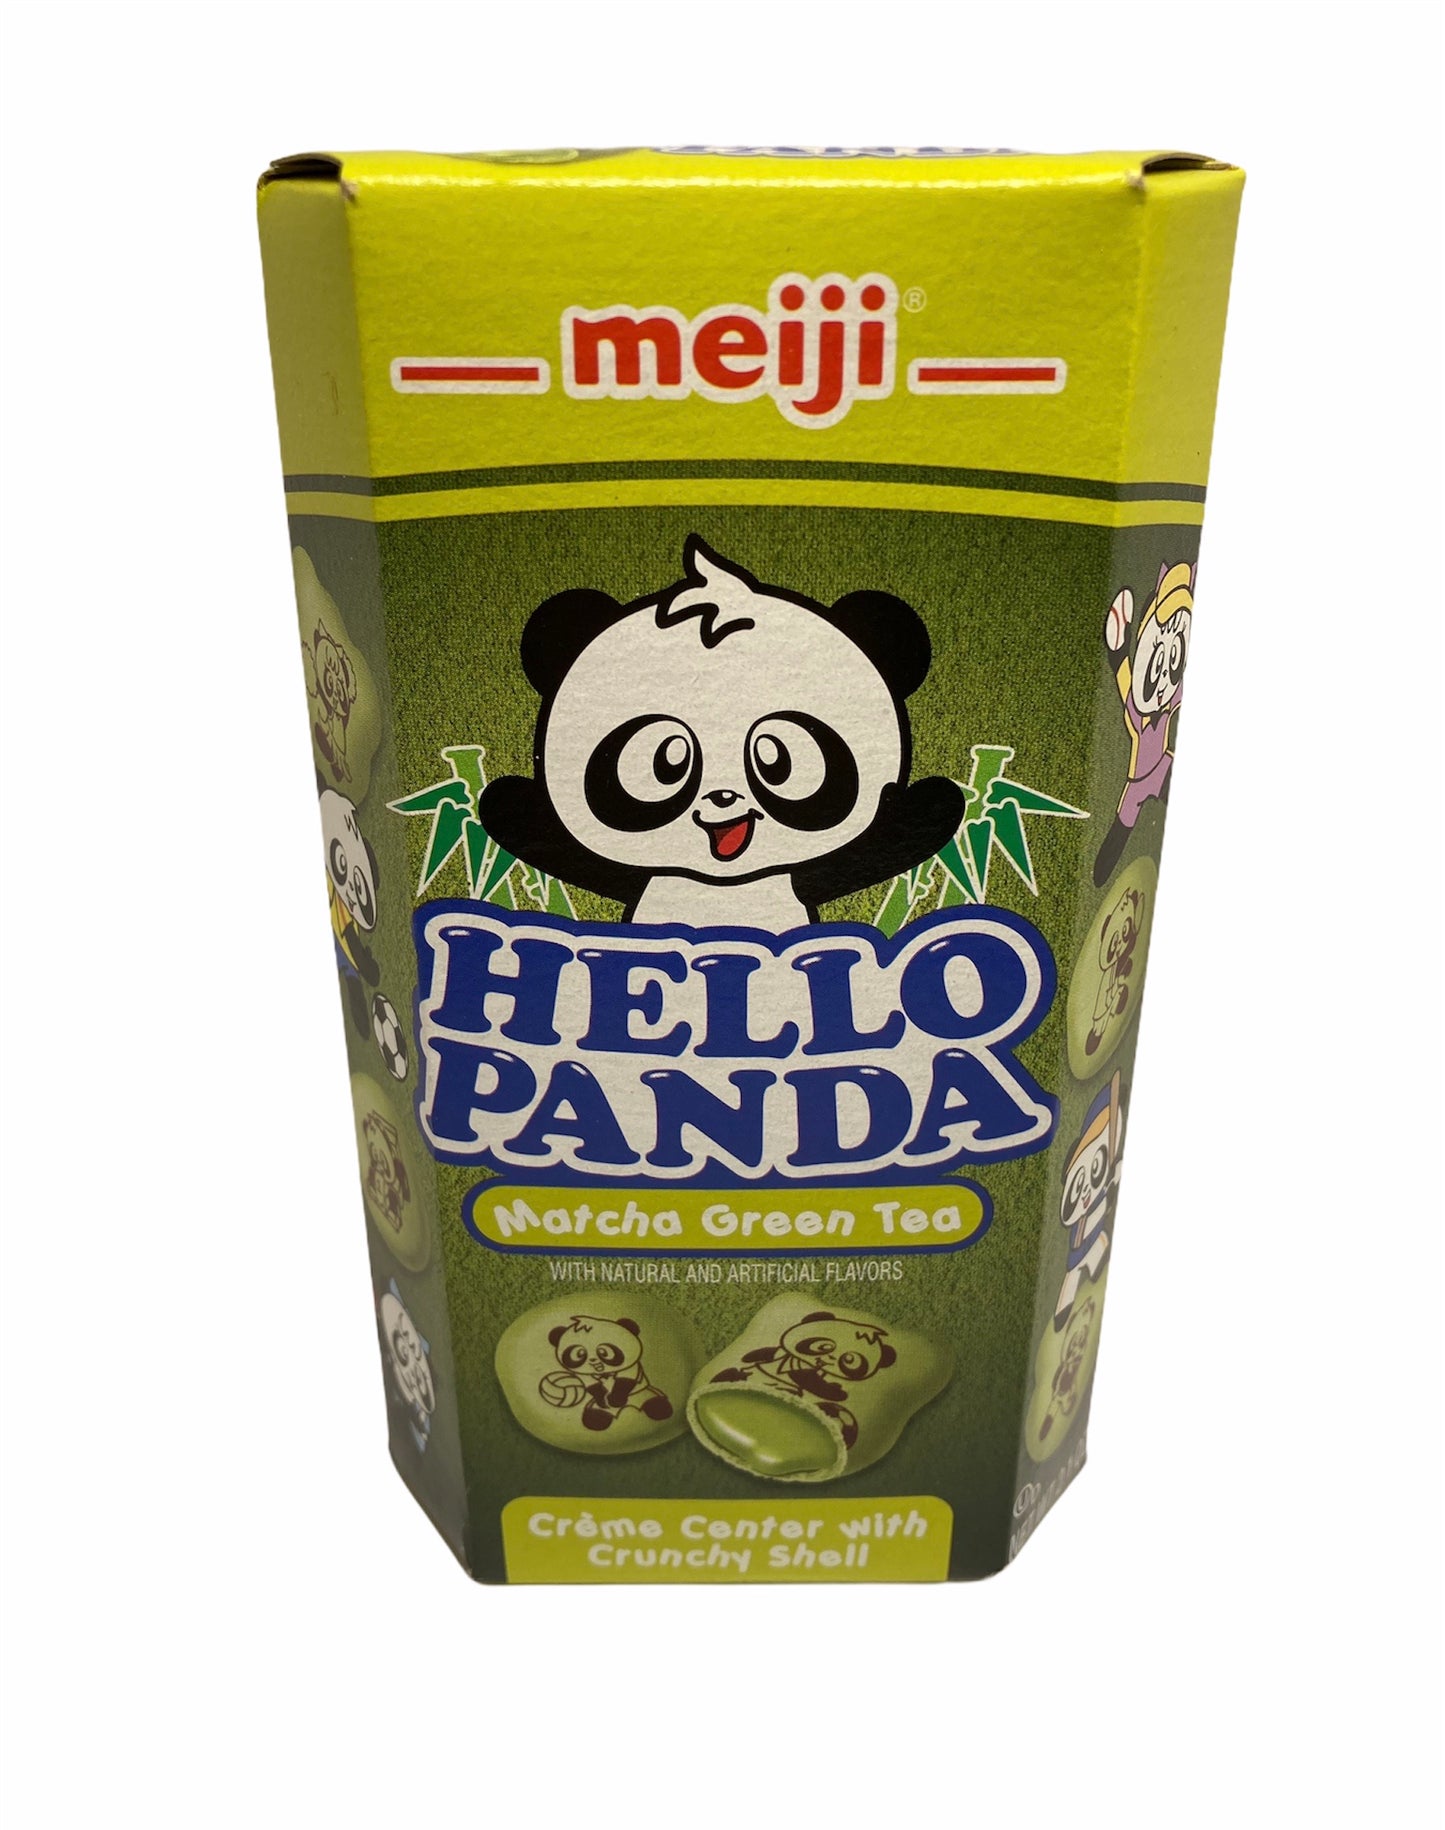 Meija Hello Panda Matcha Green Tea